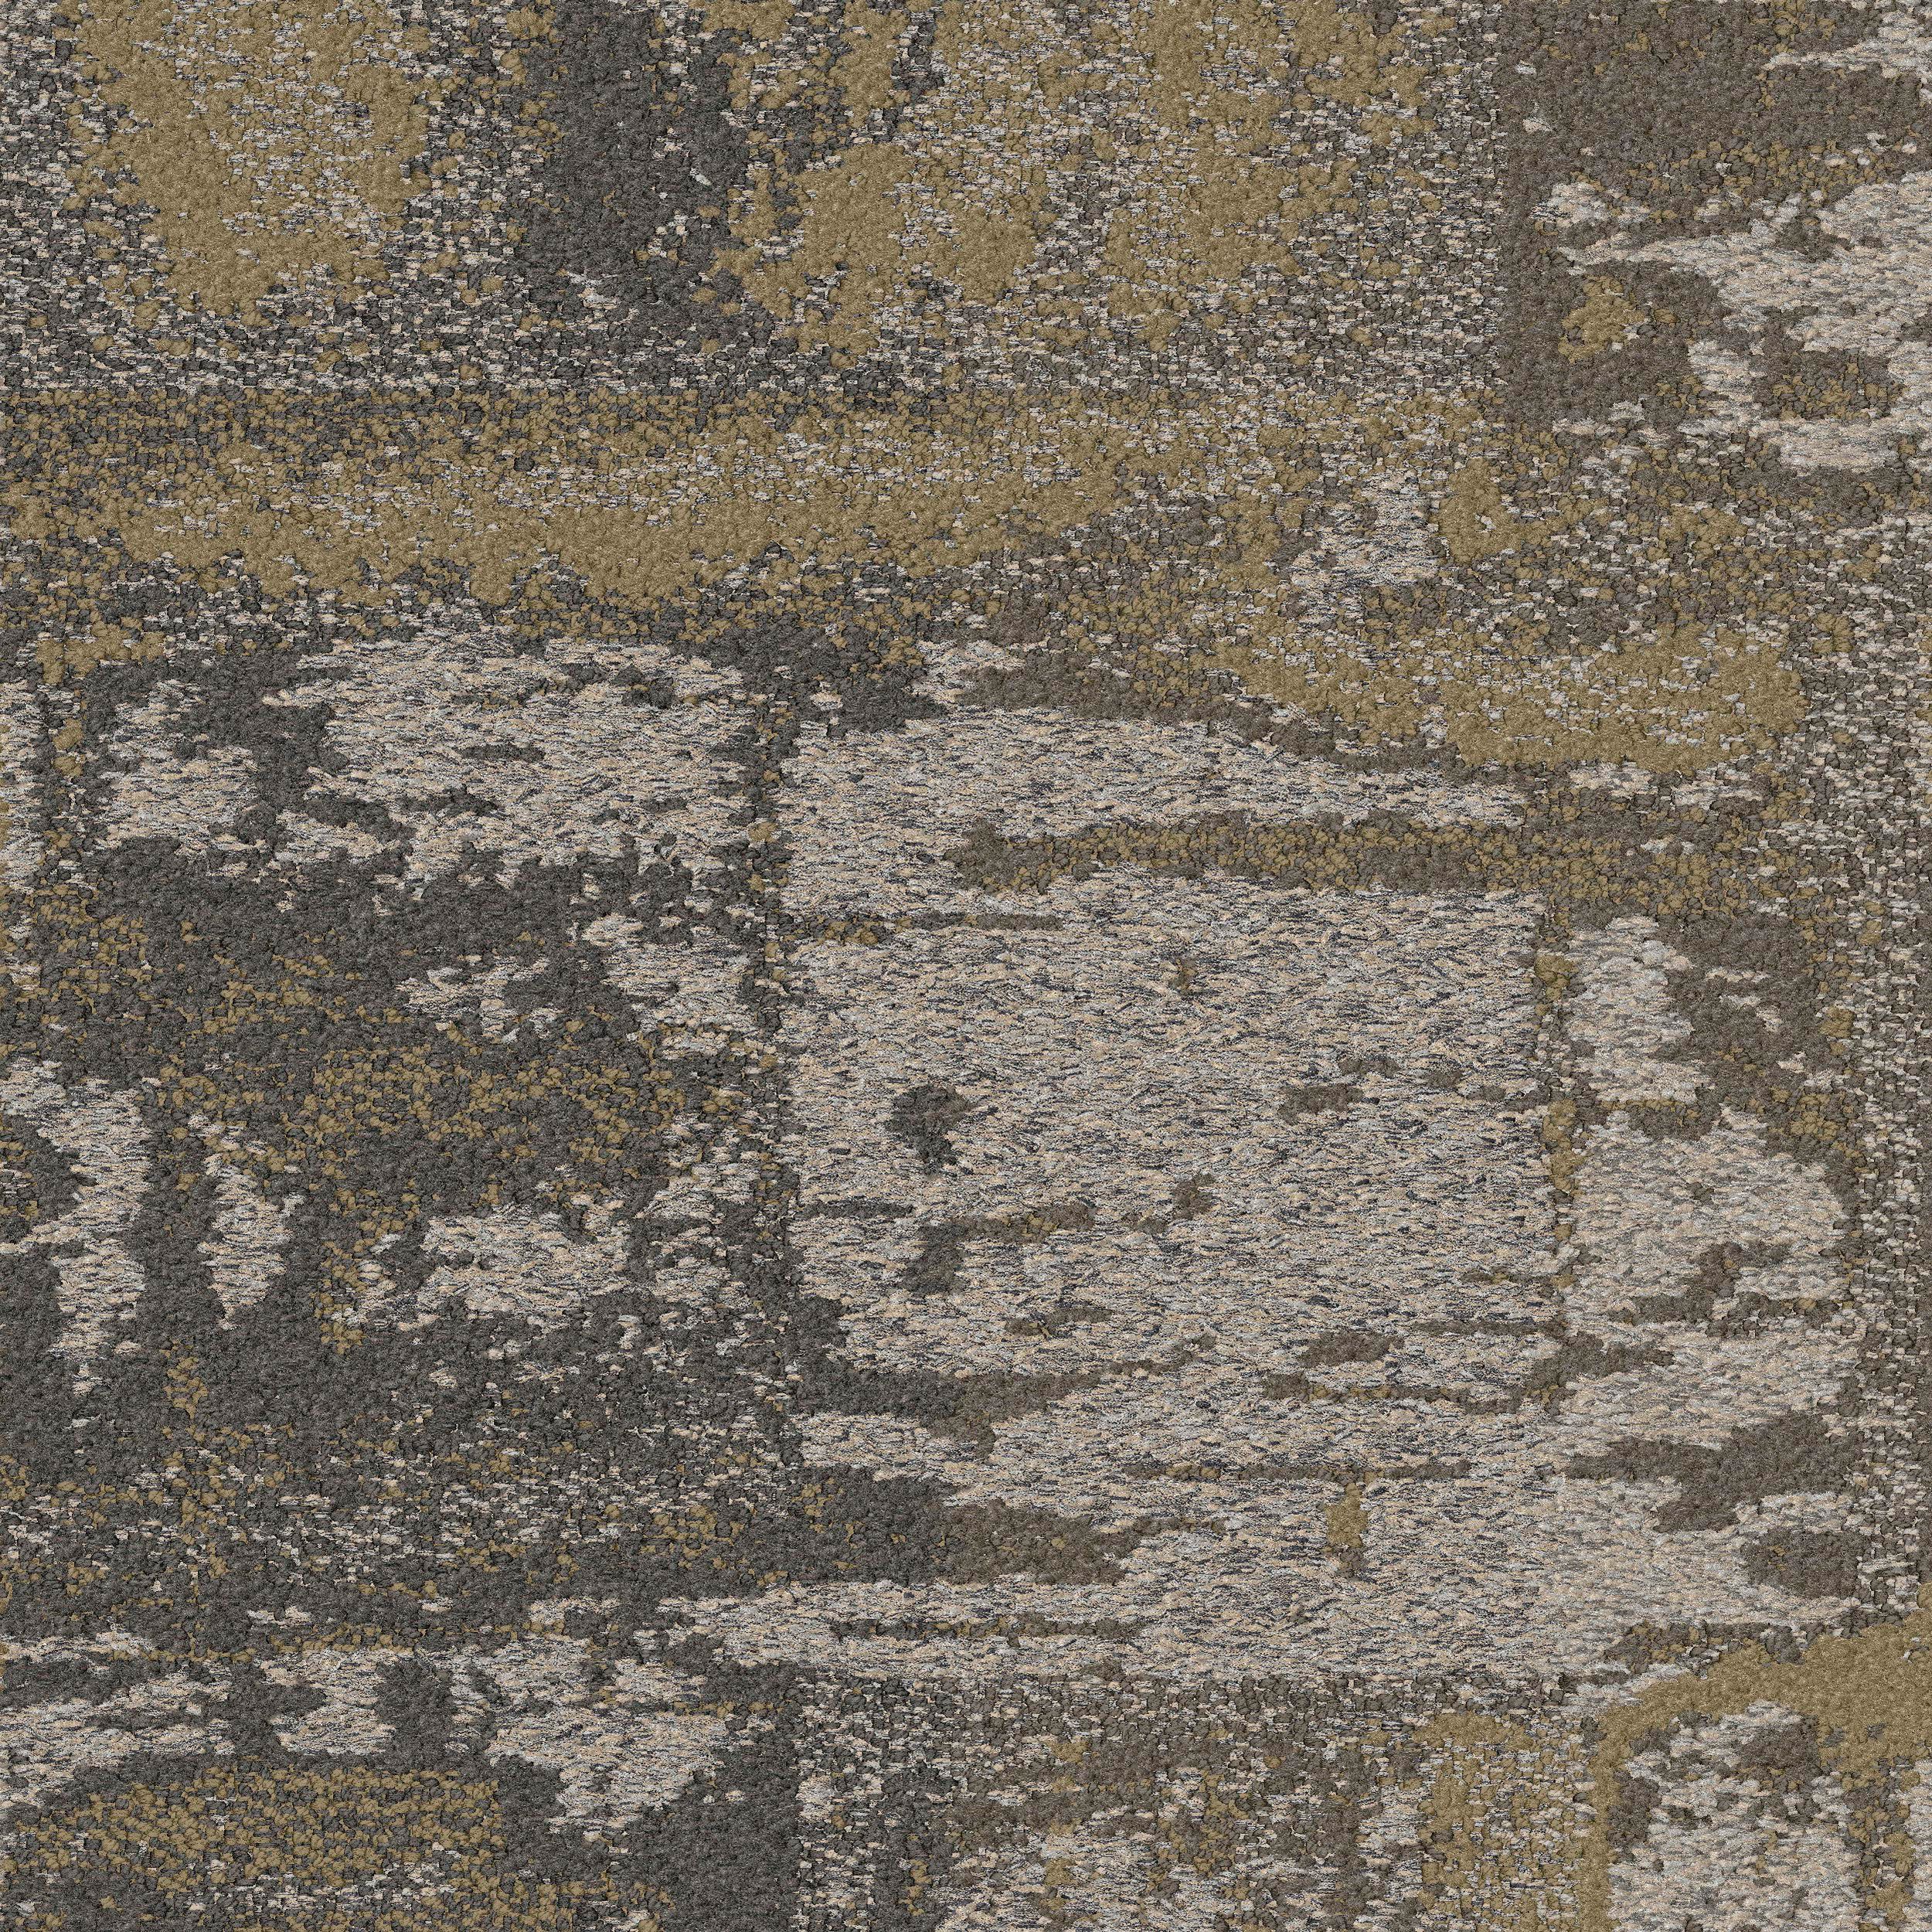 A Peeling Carpet Tile In Patina imagen número 2